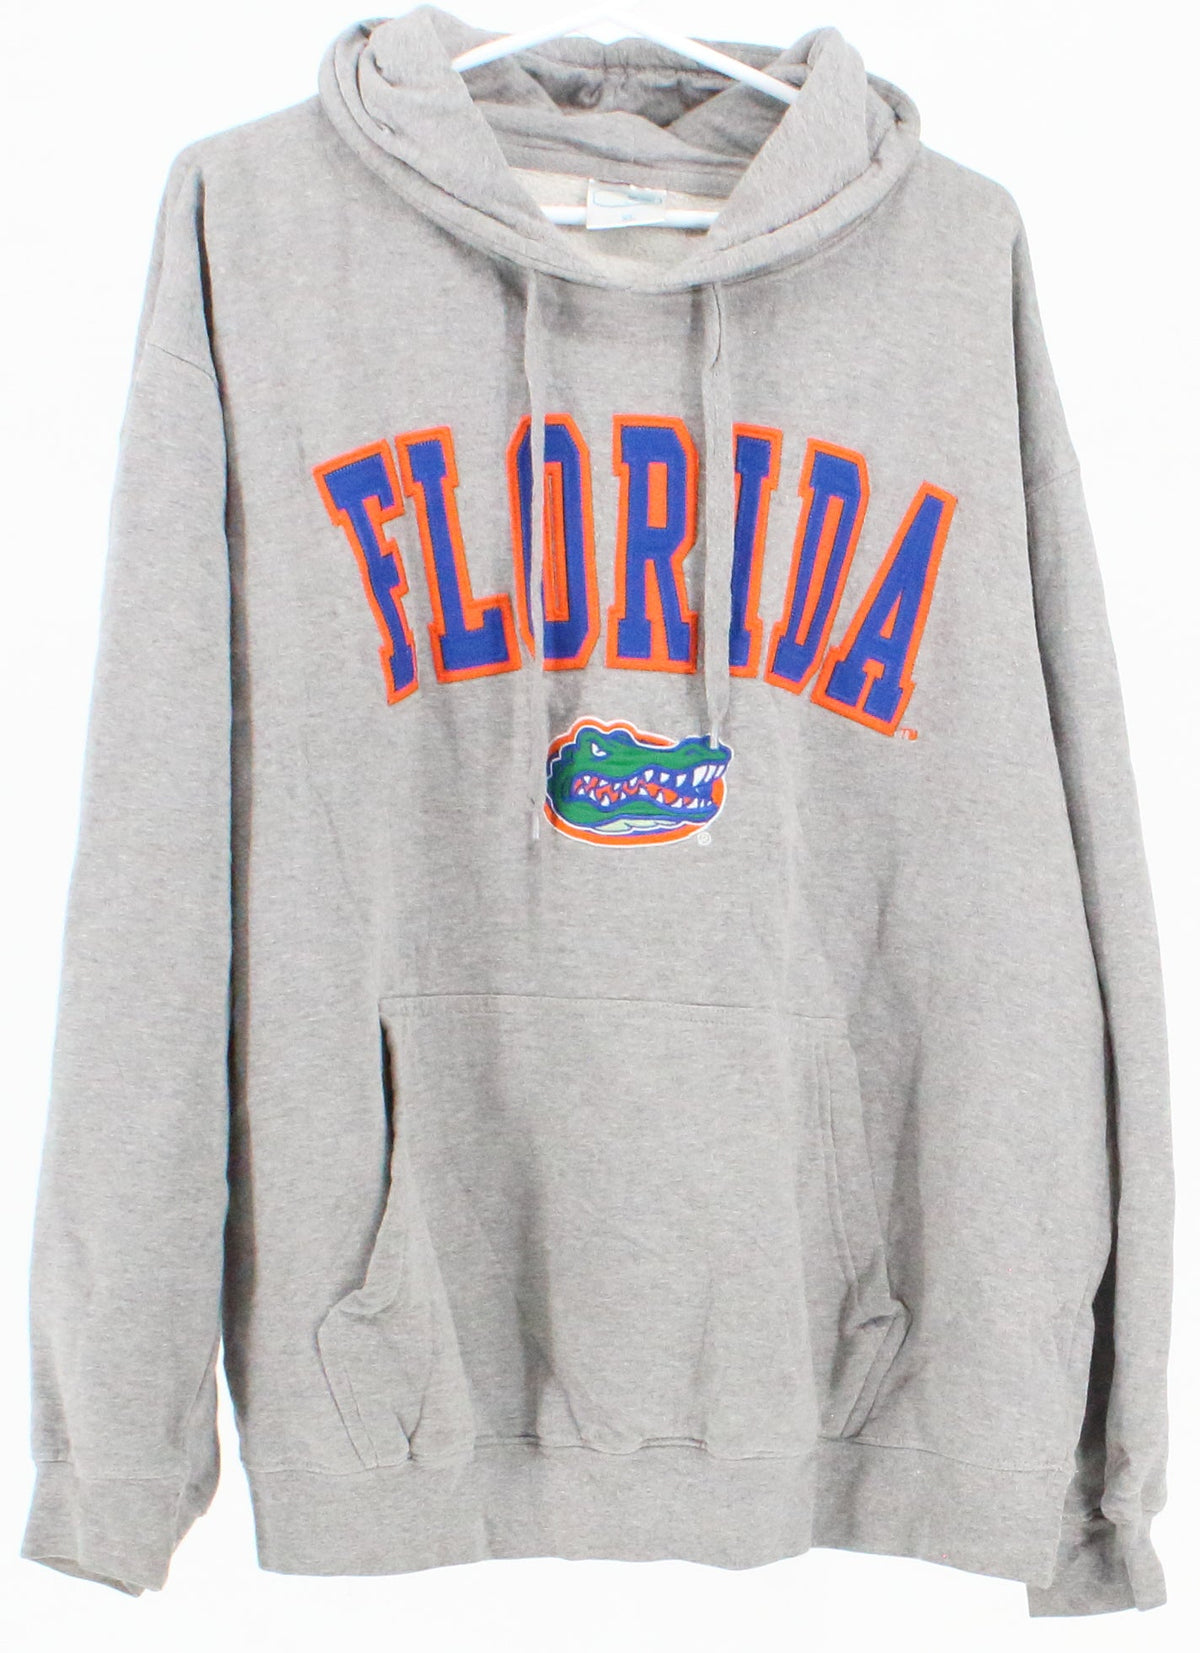 5 Florida Grey Hooded Sweatshirt